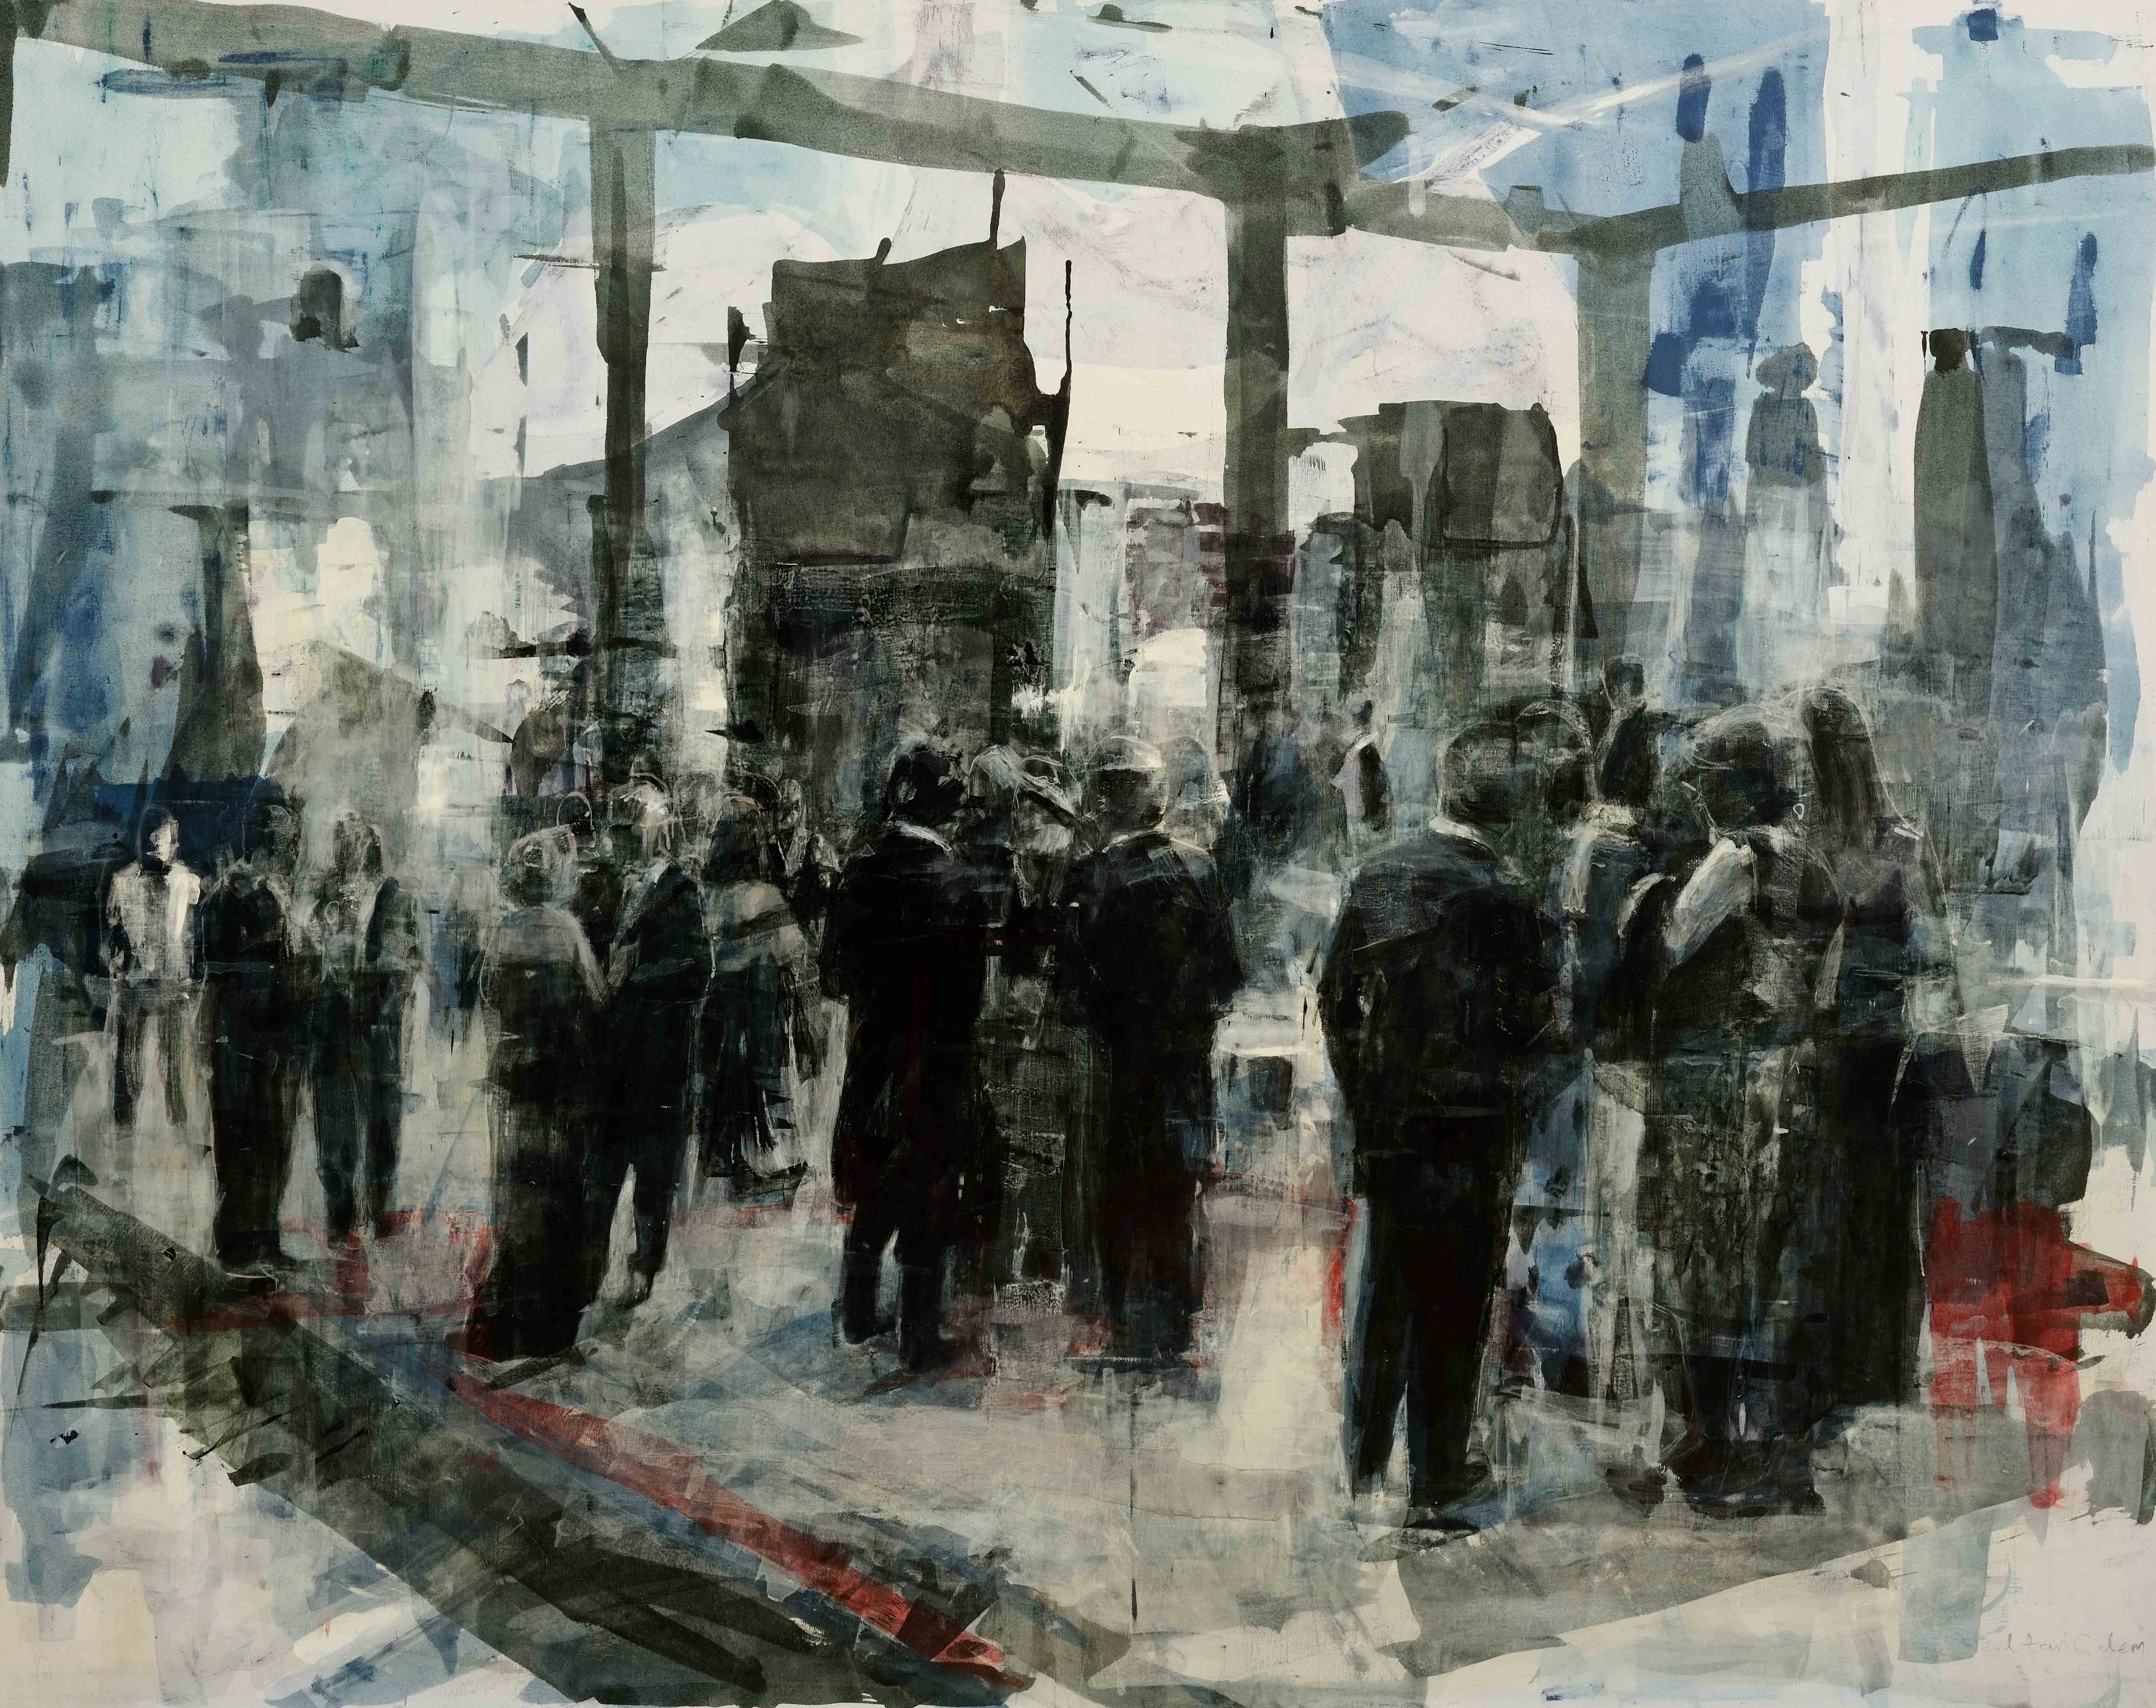 İsimsiz, Untitled, 2011 Tuval üzerine karışık teknik, Mixed media on canvas, 150X190 cm